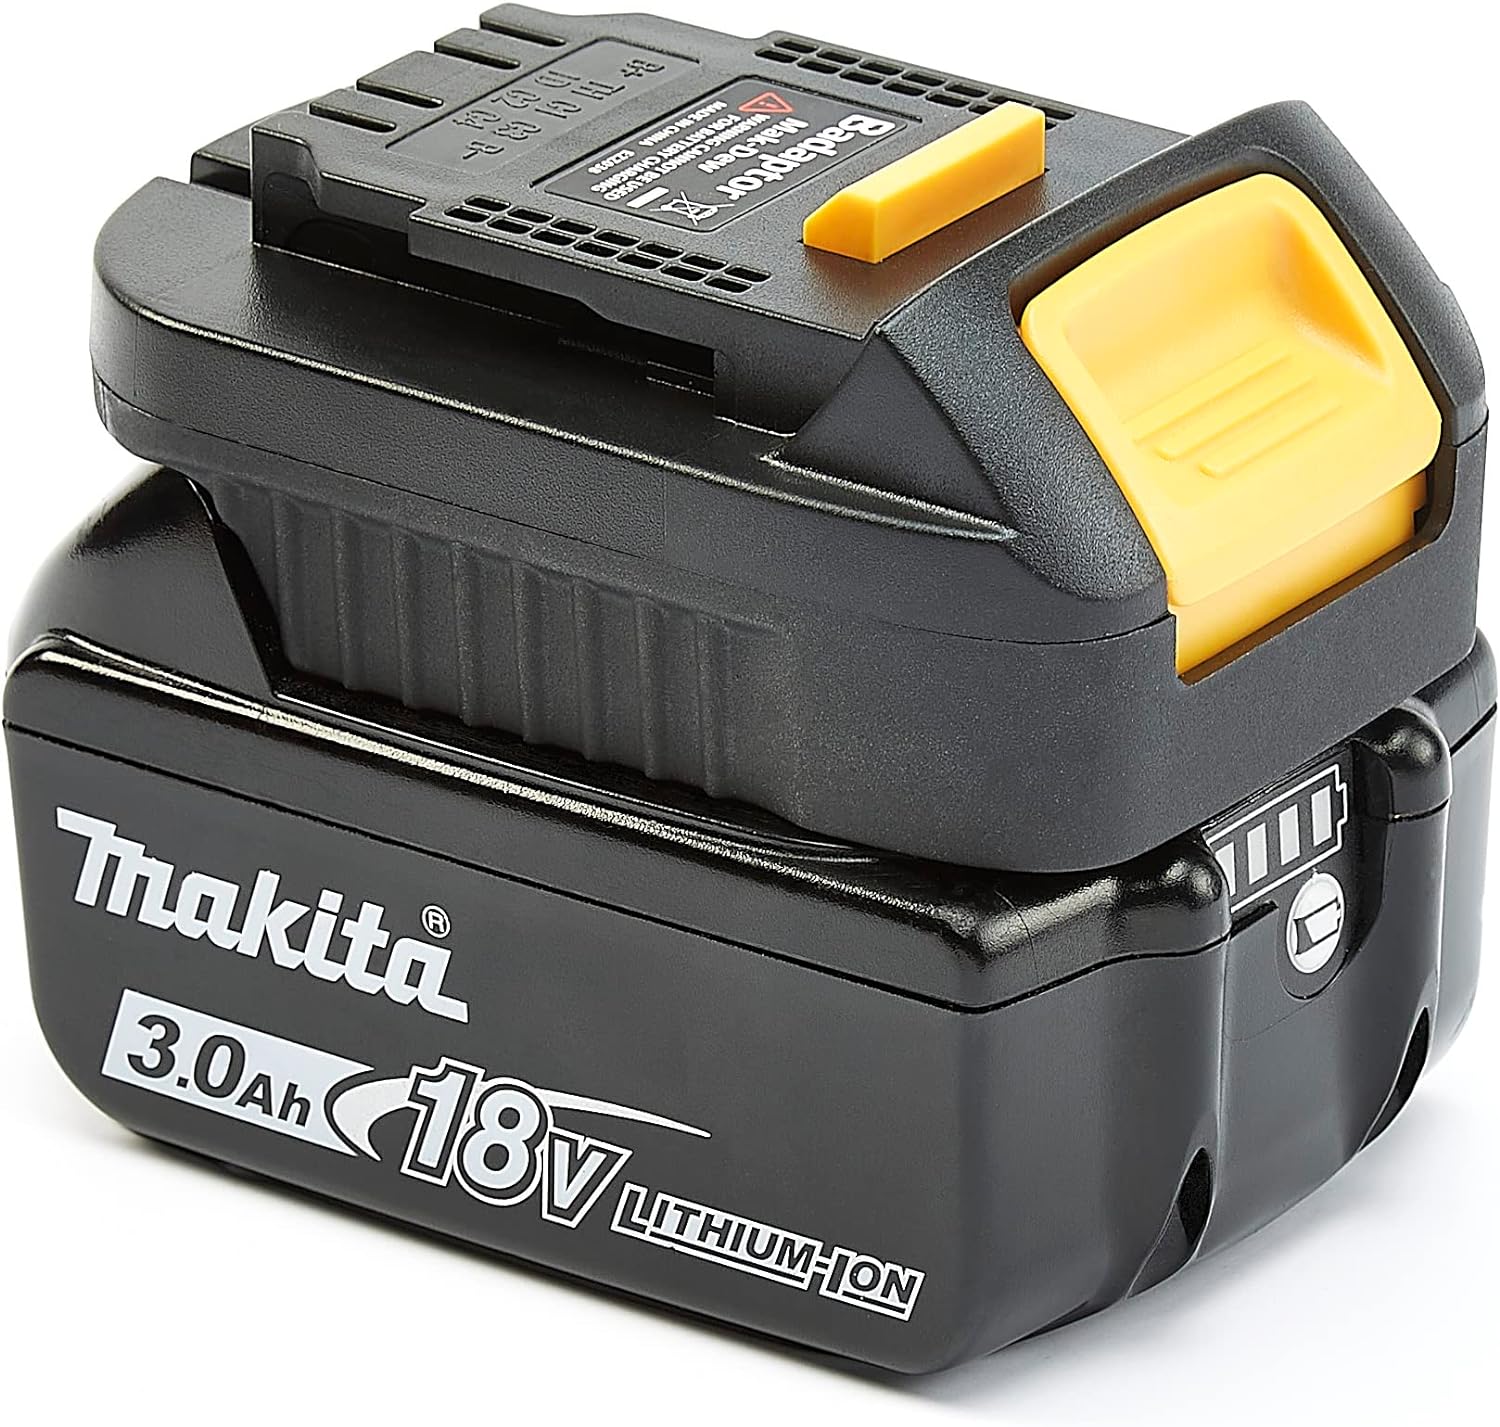 Batterie compatible Makita